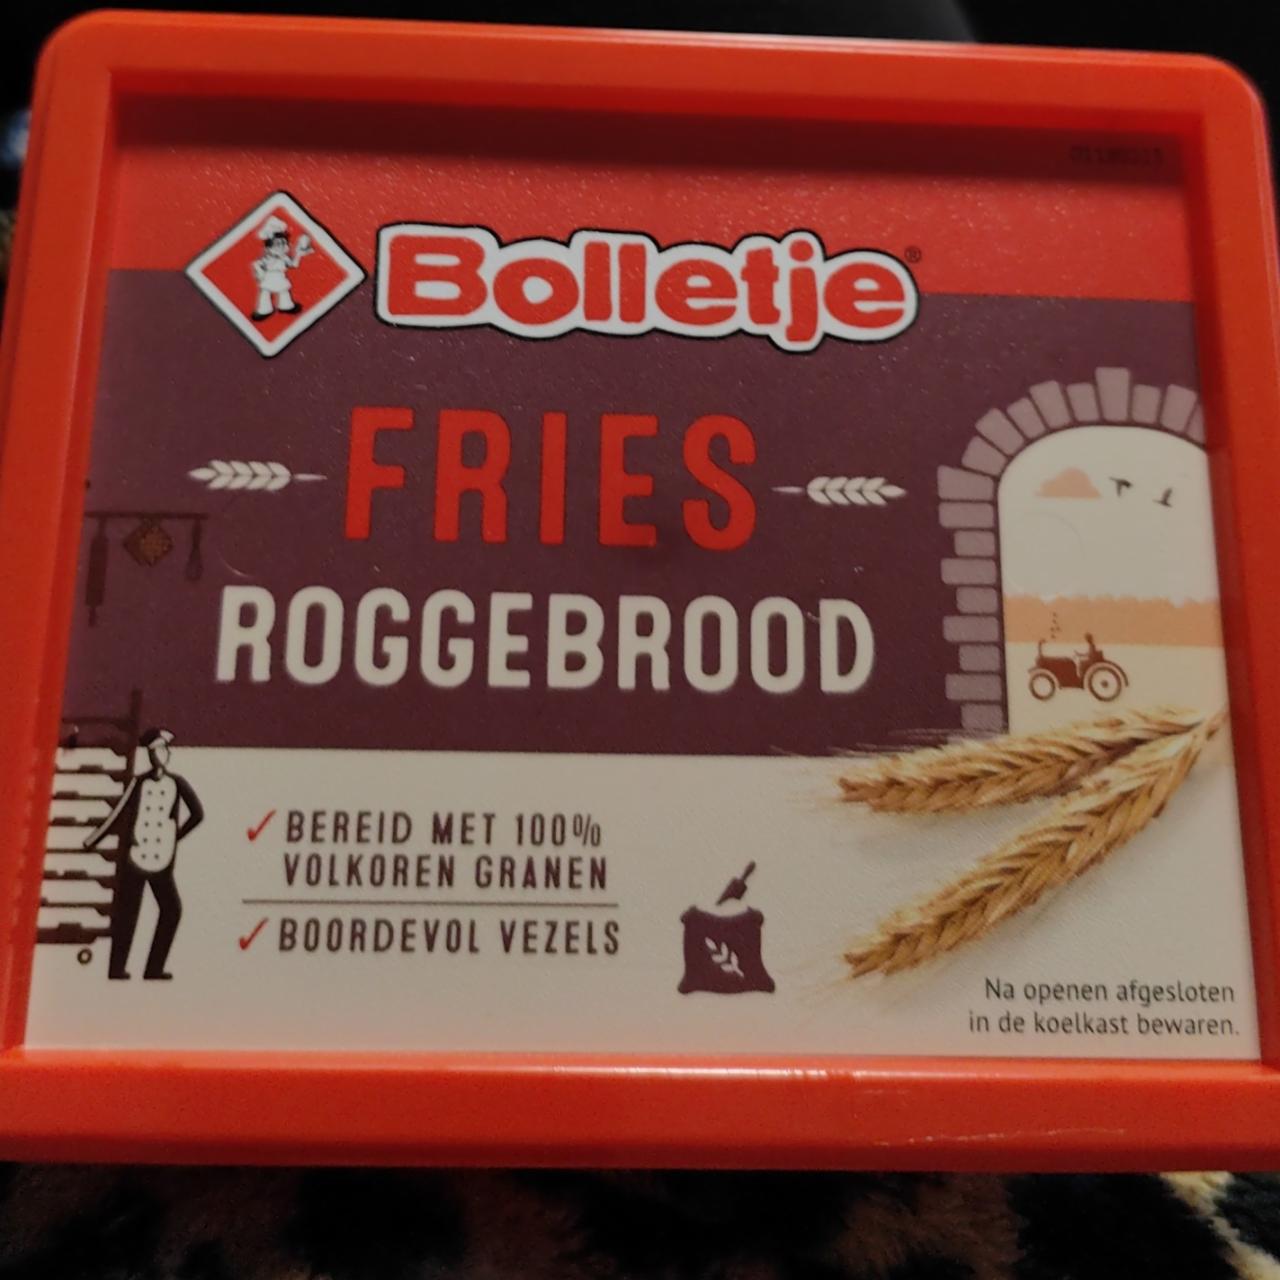 Fotografie - Fries roggebrood Bolletje